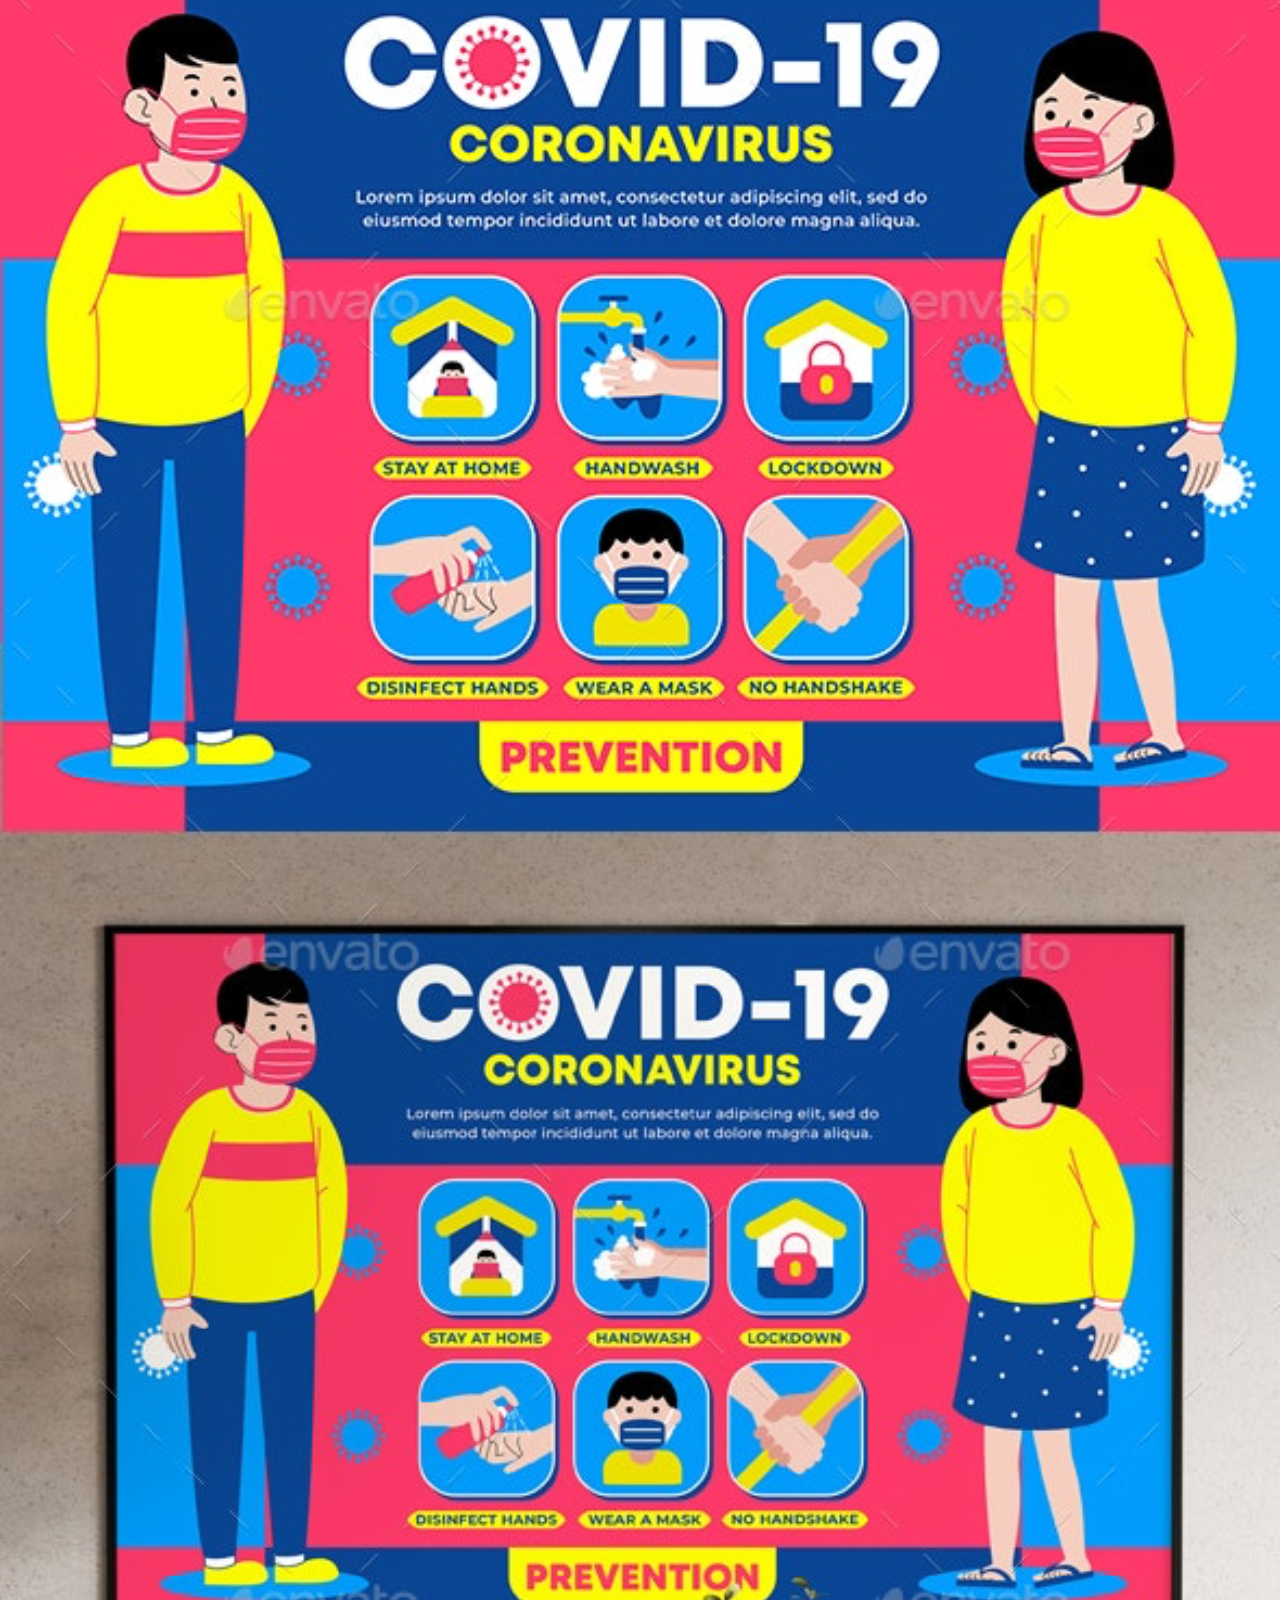 Covid 19 prevention pinterest image.